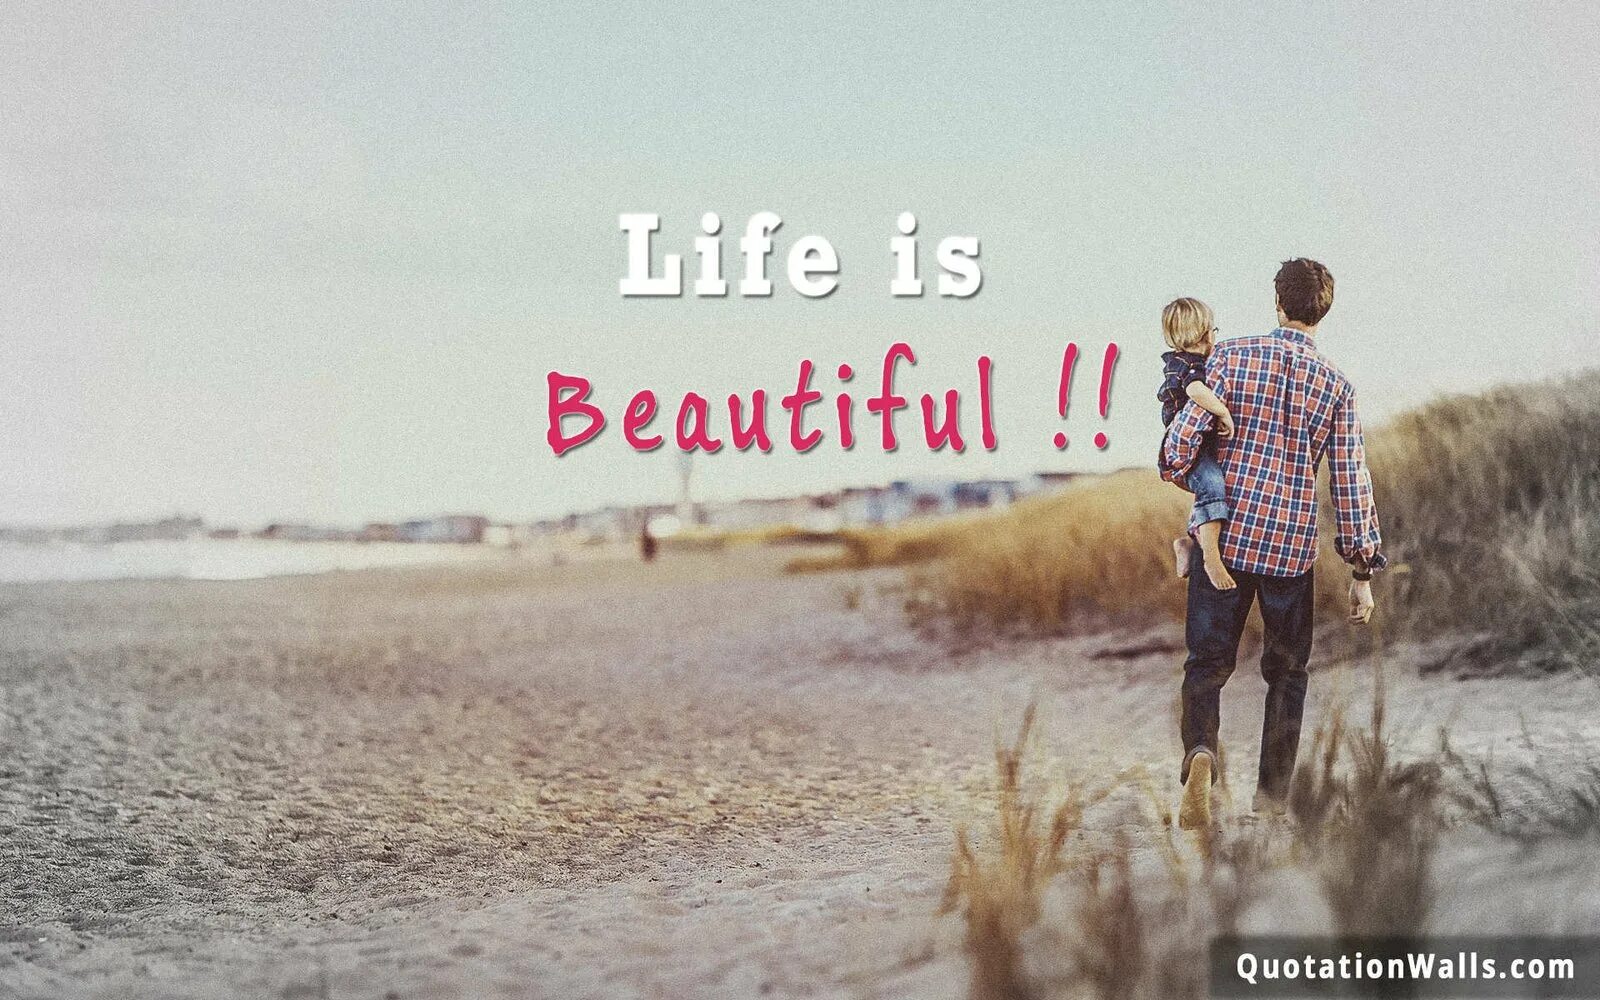 Life is beautiful. Life is beautiful картинки. Life is beautiful обои. Обои на телефон Life is beautiful.